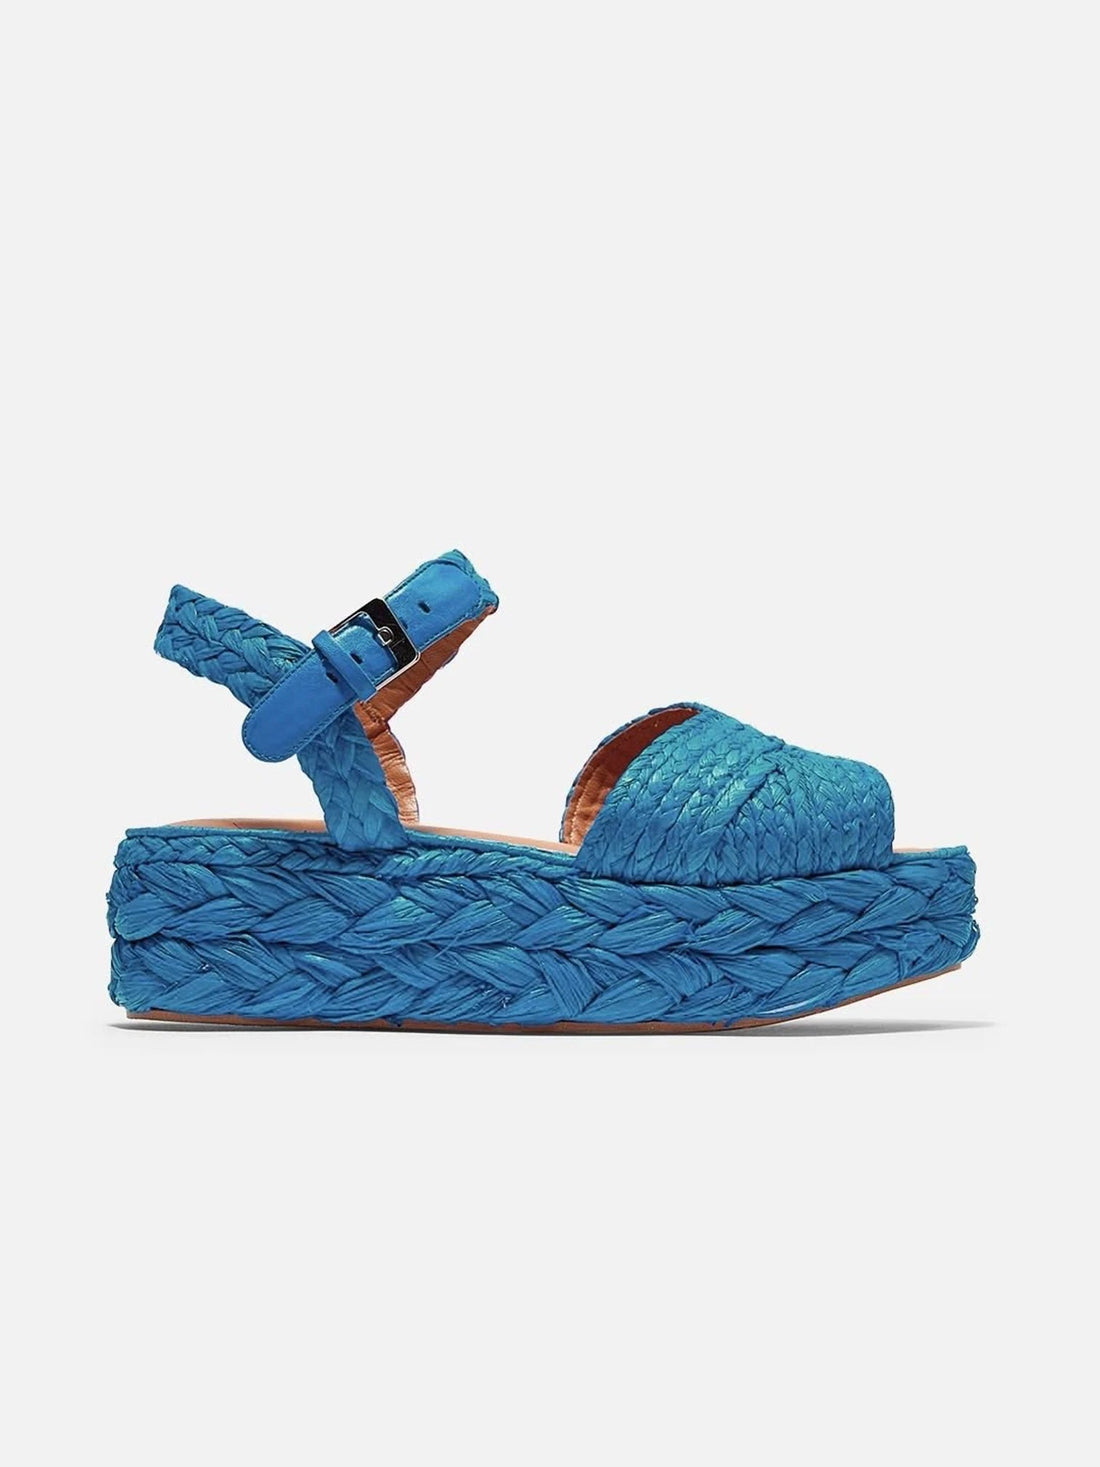 SANDALS - AIDA sandals, lambskin &amp; straw blue wave - AIDA9WAVRAFM350 - Clergerie Paris - USA